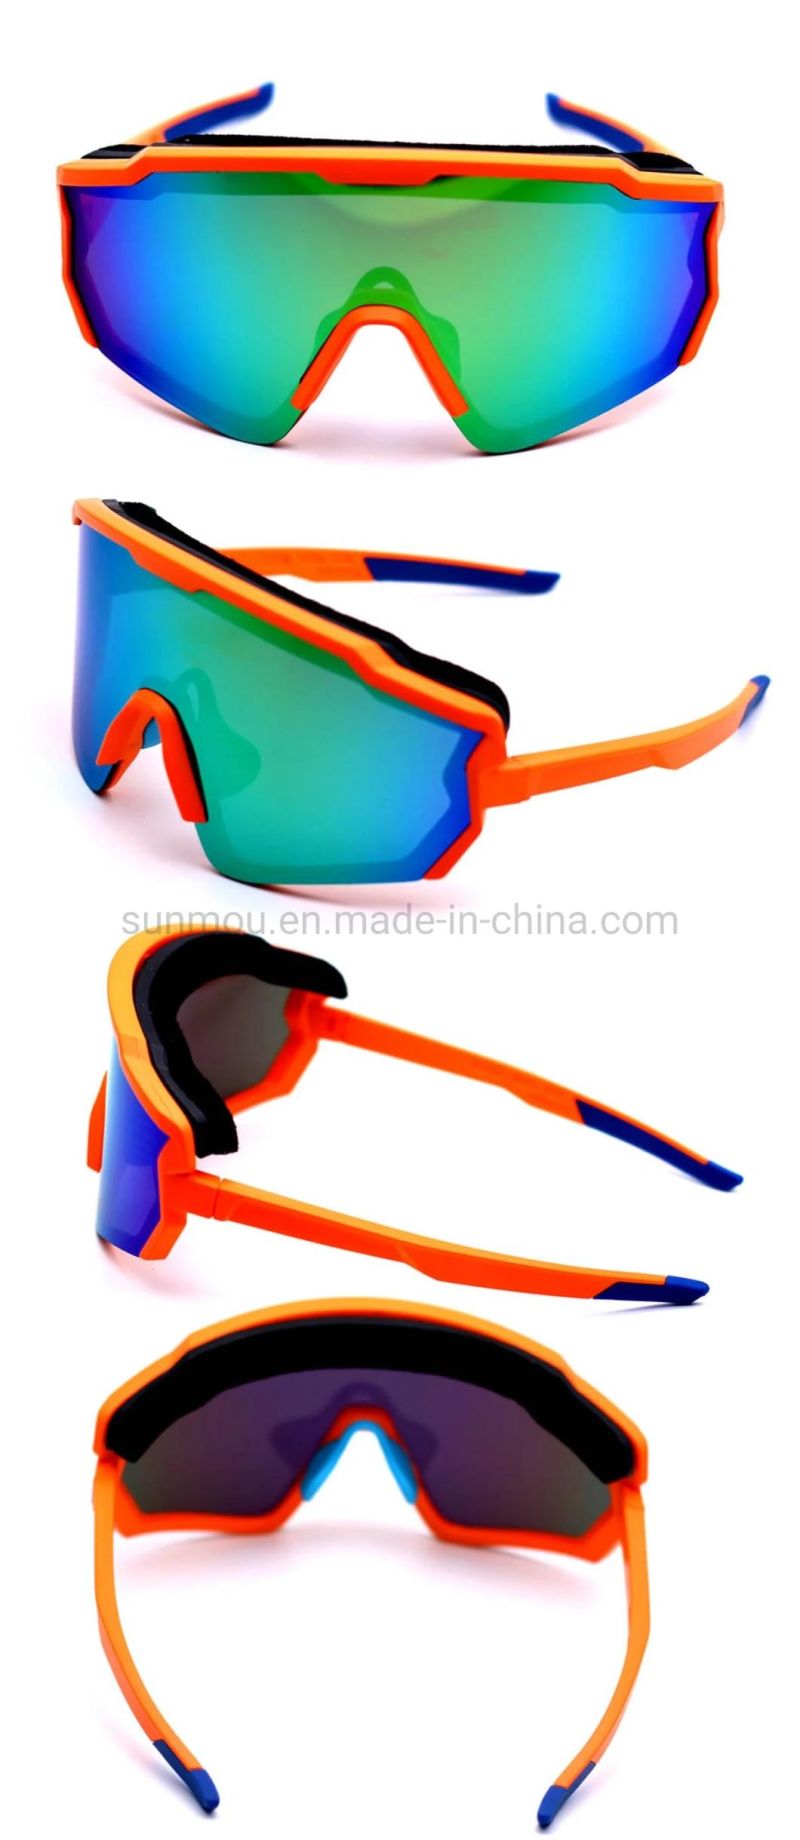 SA0833A01 100% UV Protection Polycarbonate PC Lens Eyewear Sunglasses Eye Glasses High Quality Popular Walking Protective Glasses Mask for Men Women Unisex